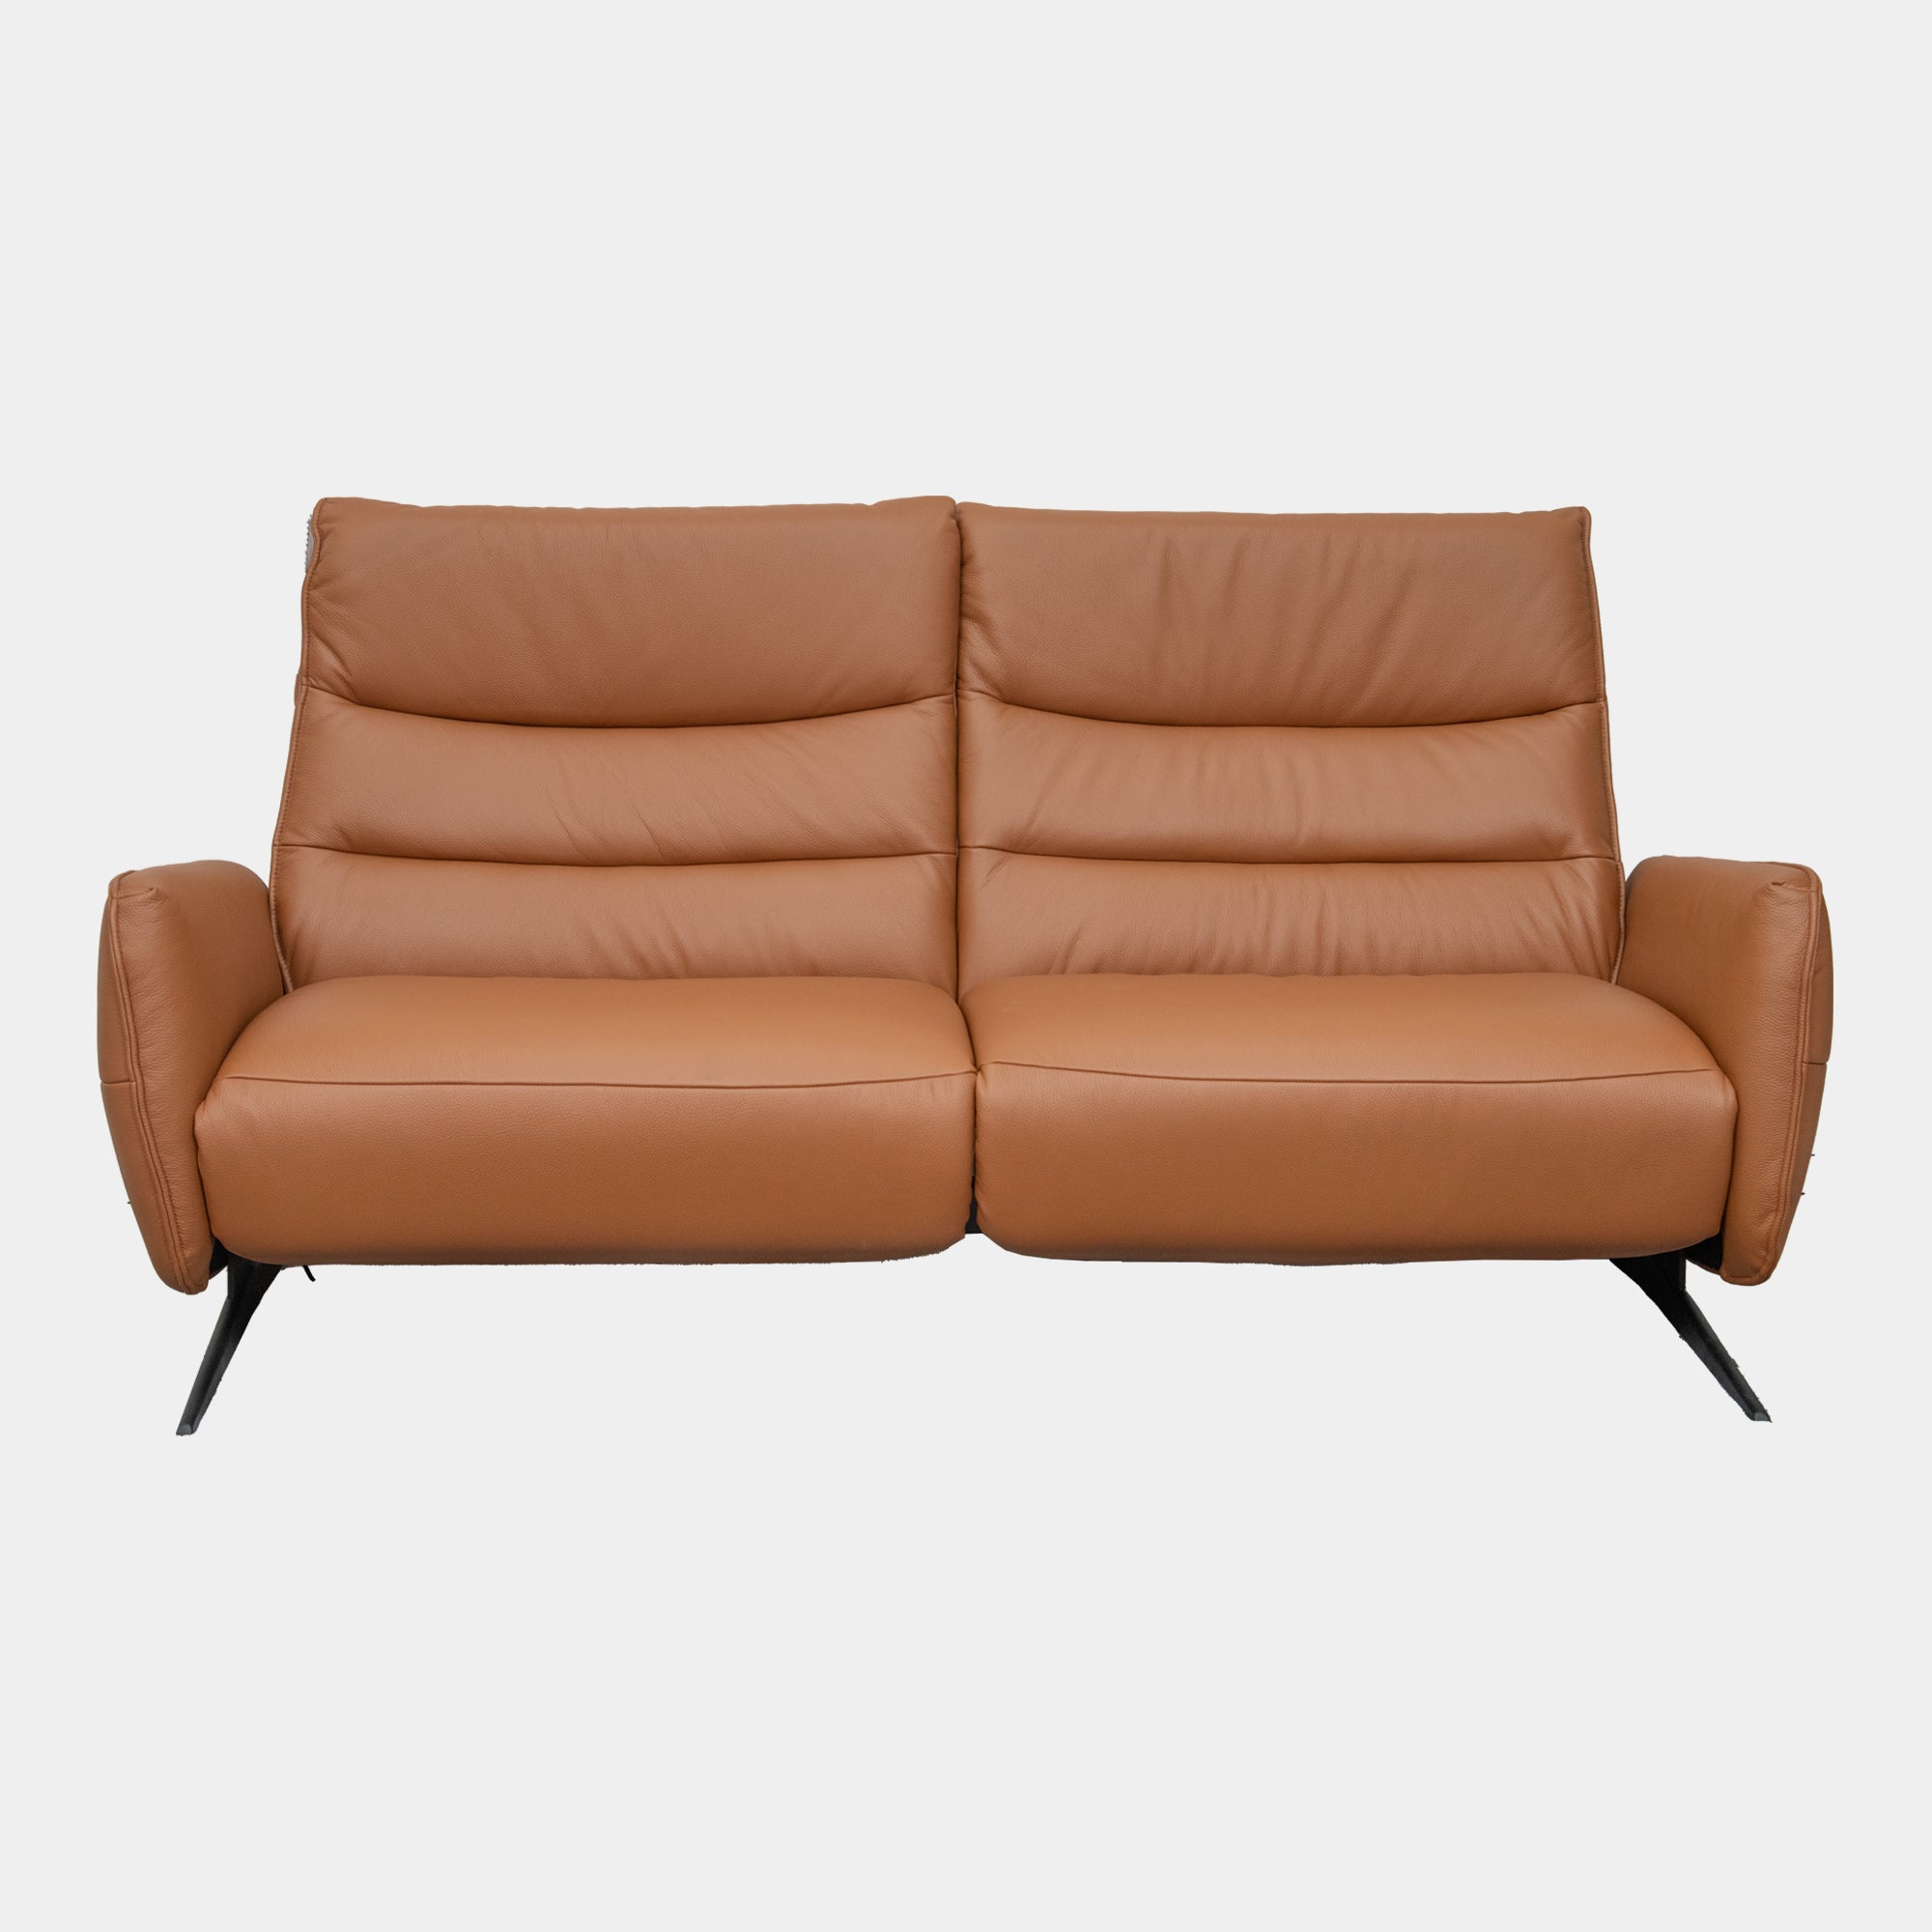 Danube - 3 Seat (2 Cushion) Manual Recliner Sofa In Leather